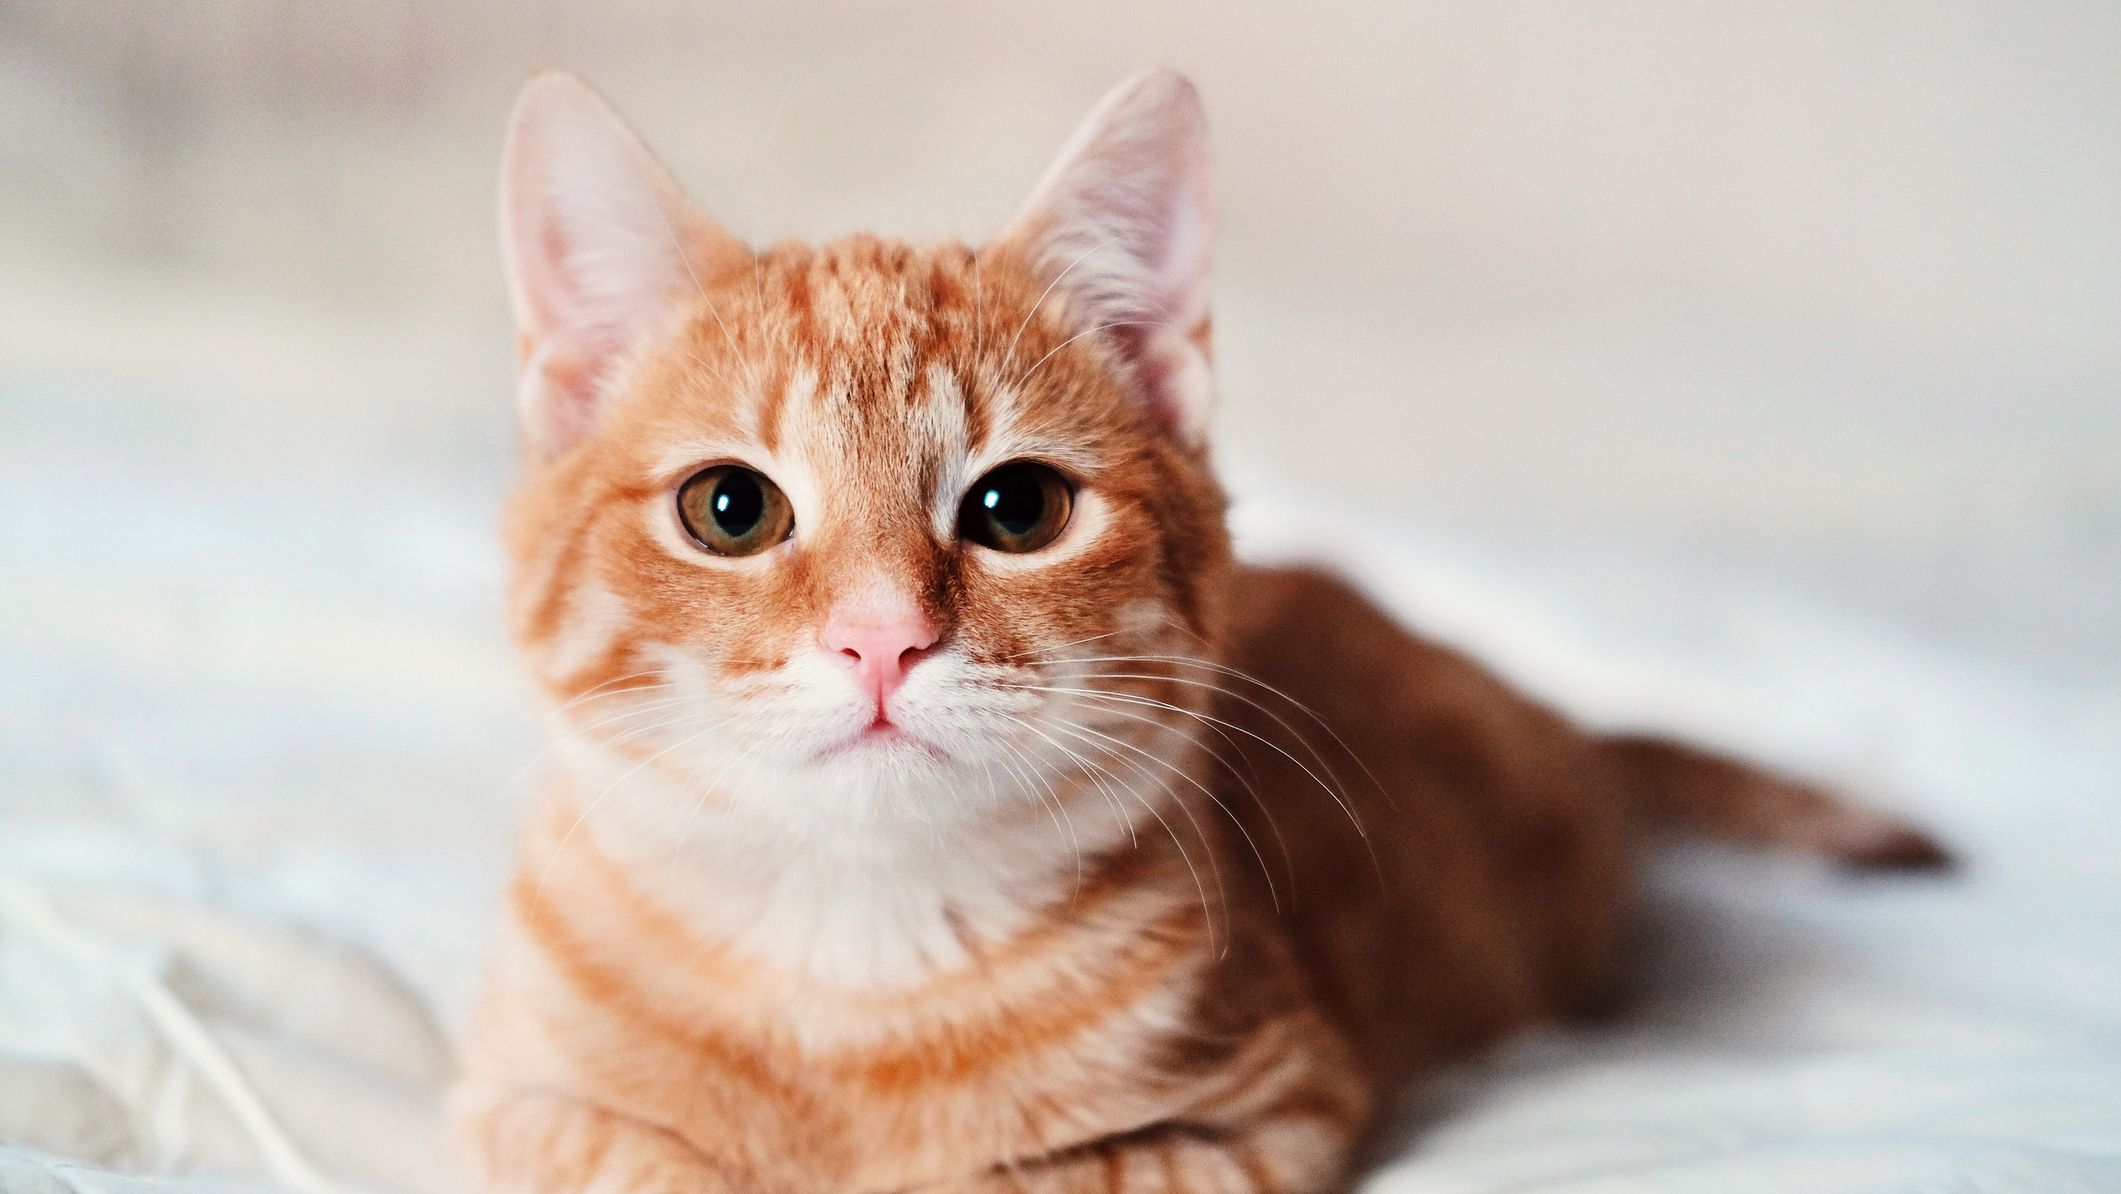 25 Best Cat Instagram Captions - Short And Funny Cat Captions